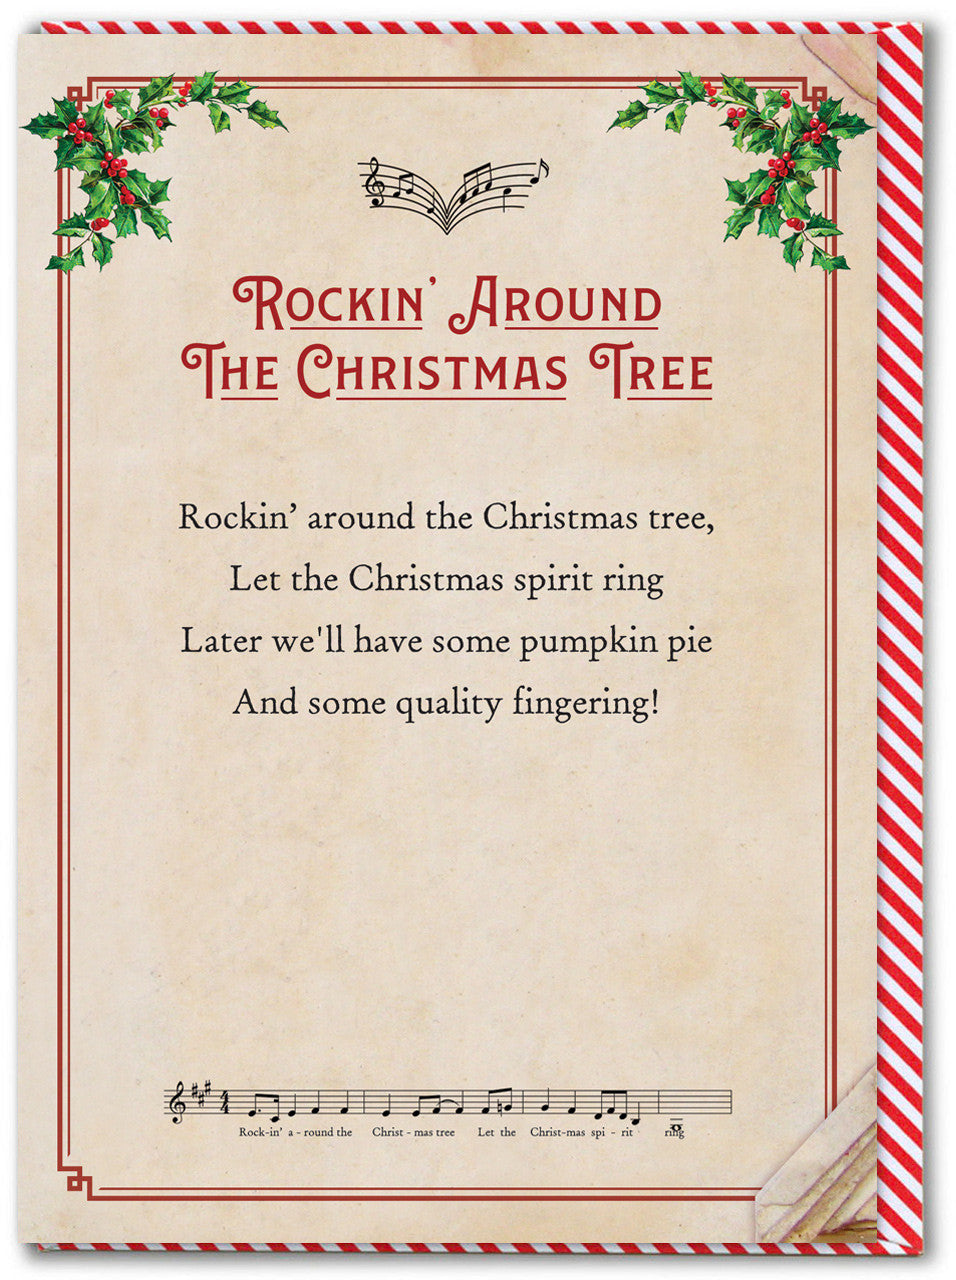 Saucy Christmas Songbook Card - Rockin Around the Christmas Tree - sweary Christmas card - Brainbox Candy